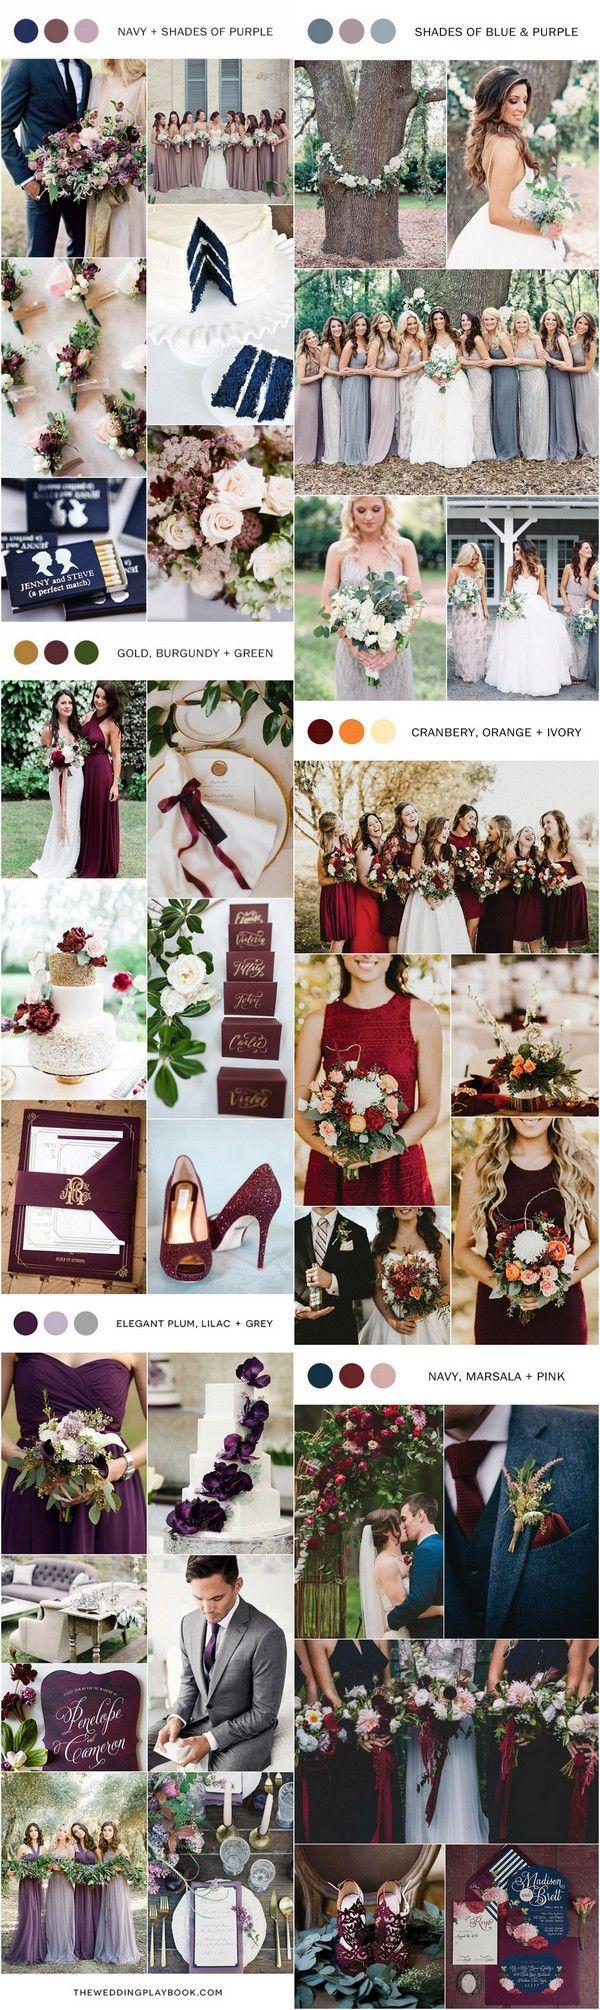 زفاف - 10 Fall Wedding Color Ideas You'll Love For 2017